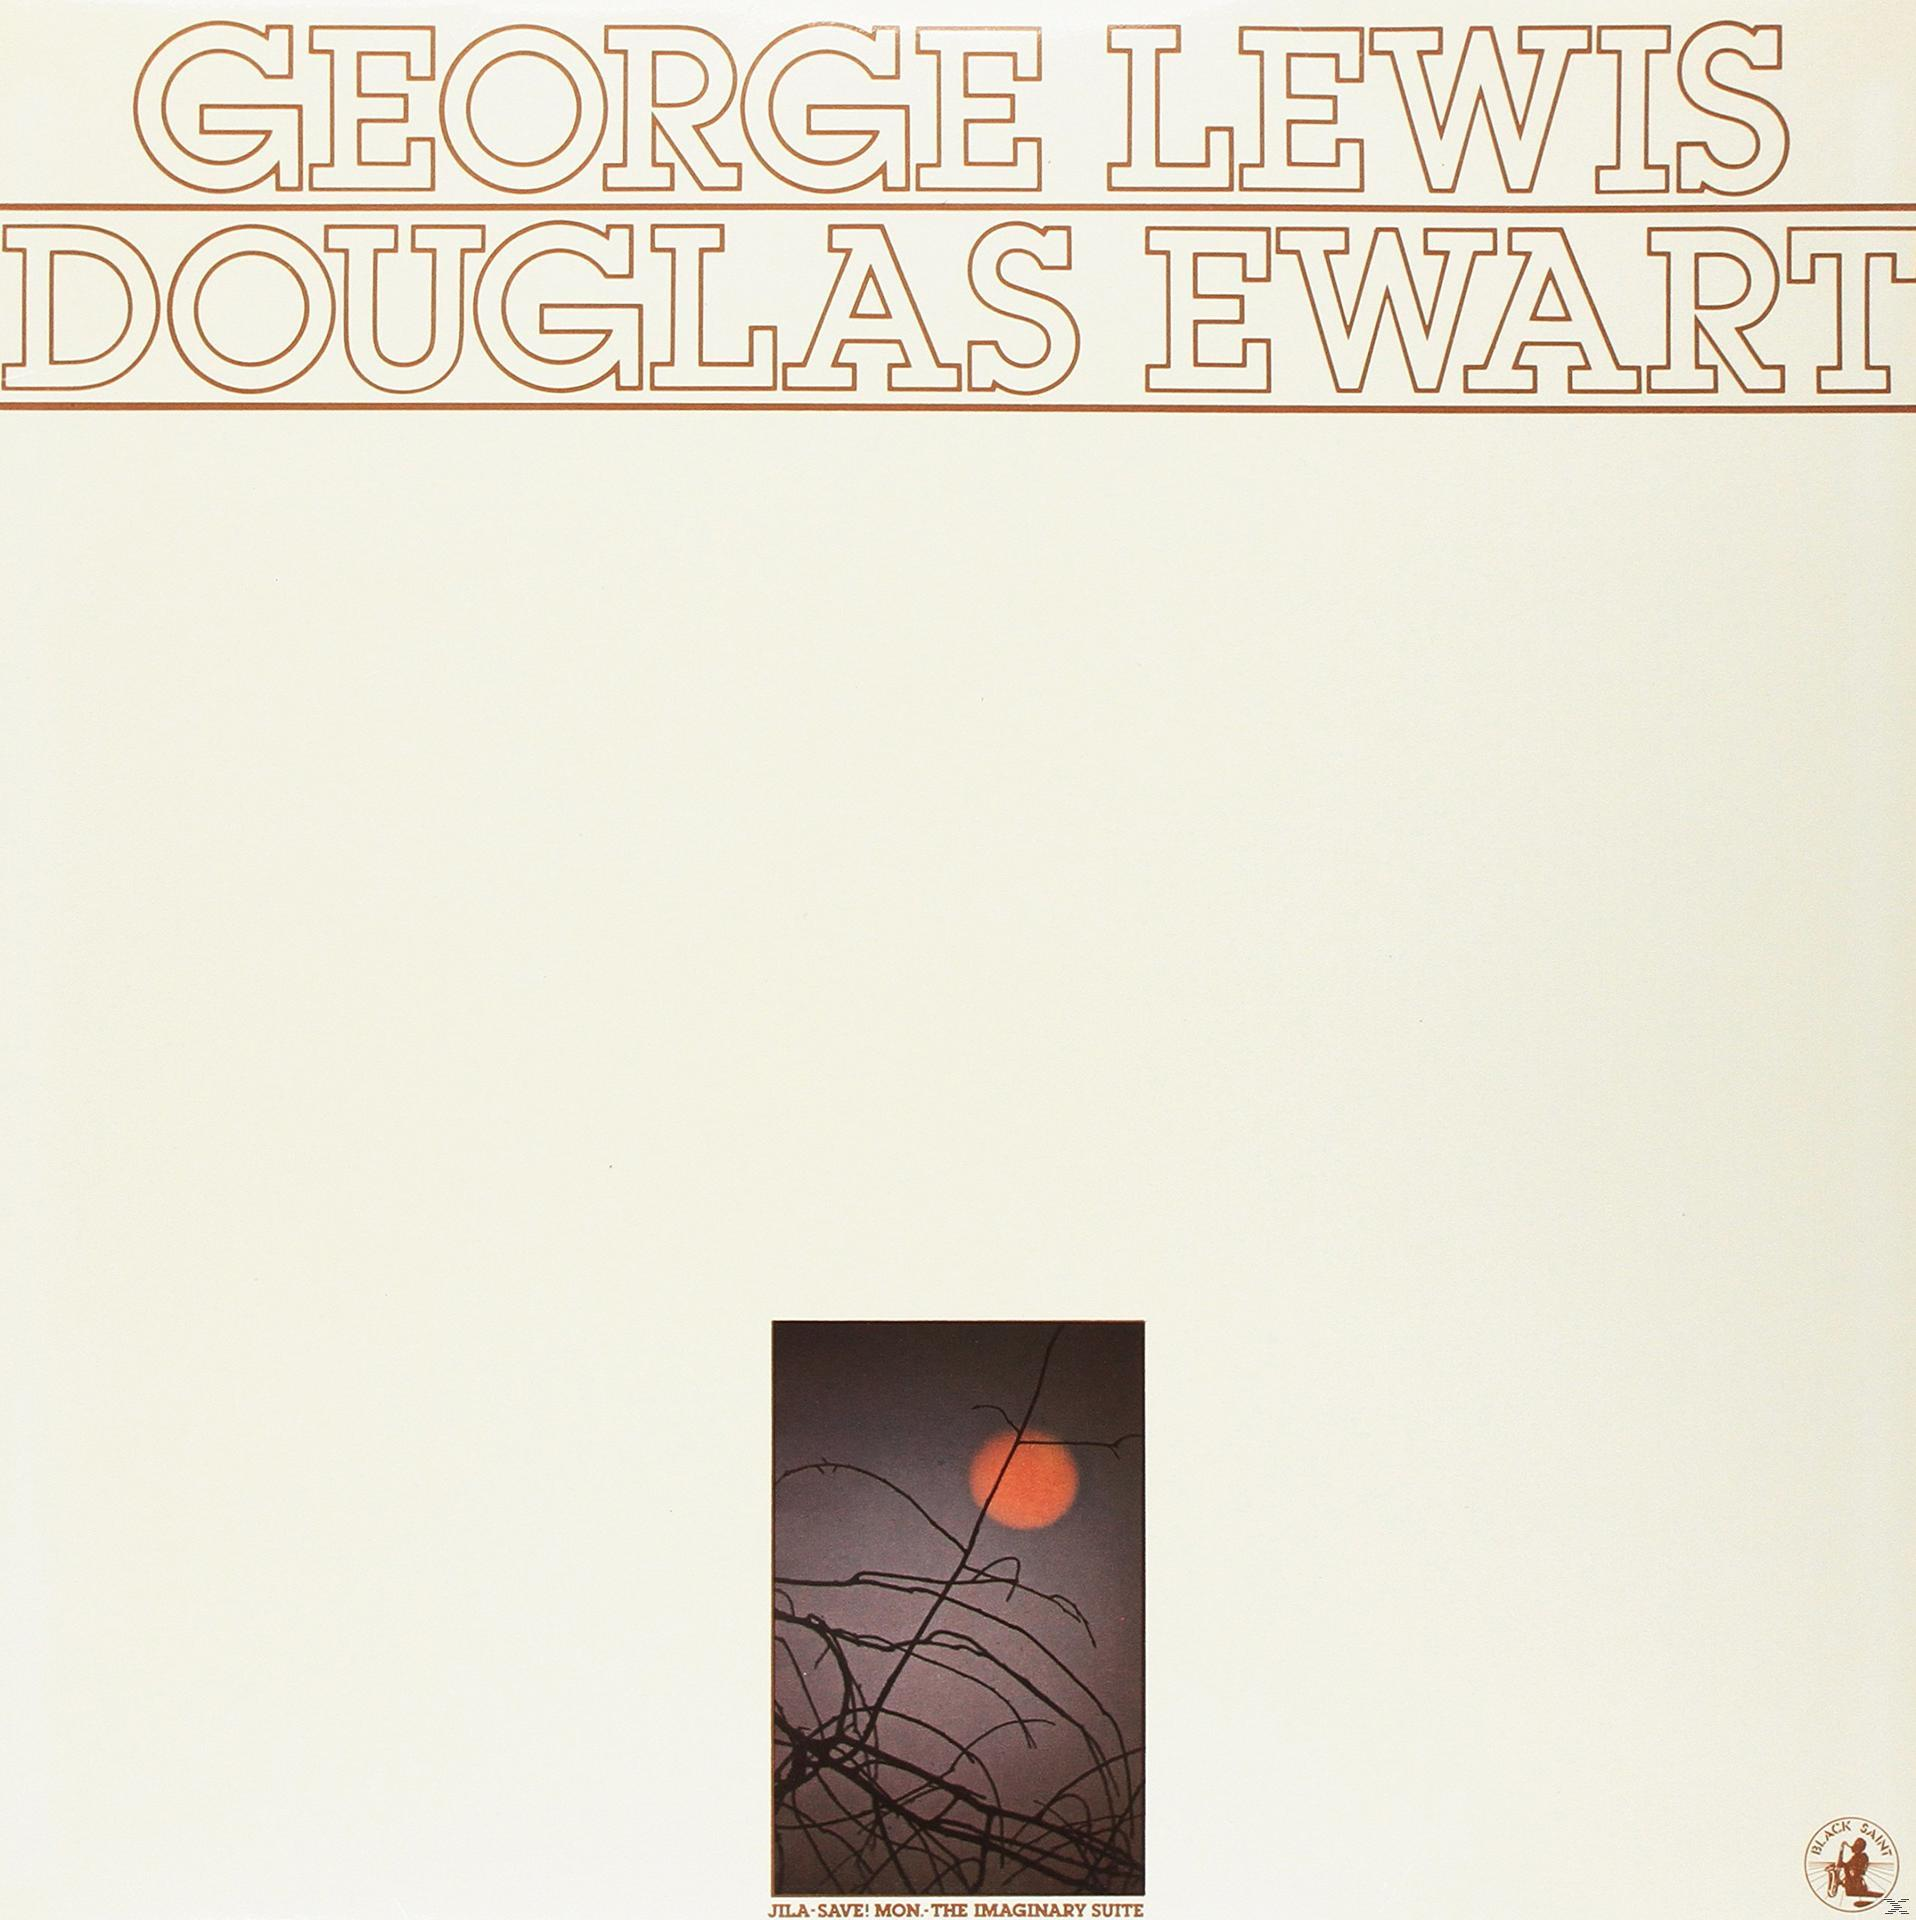 Lewis (Vinyl) Imaginary The George Suite - - Ewart & Douglas